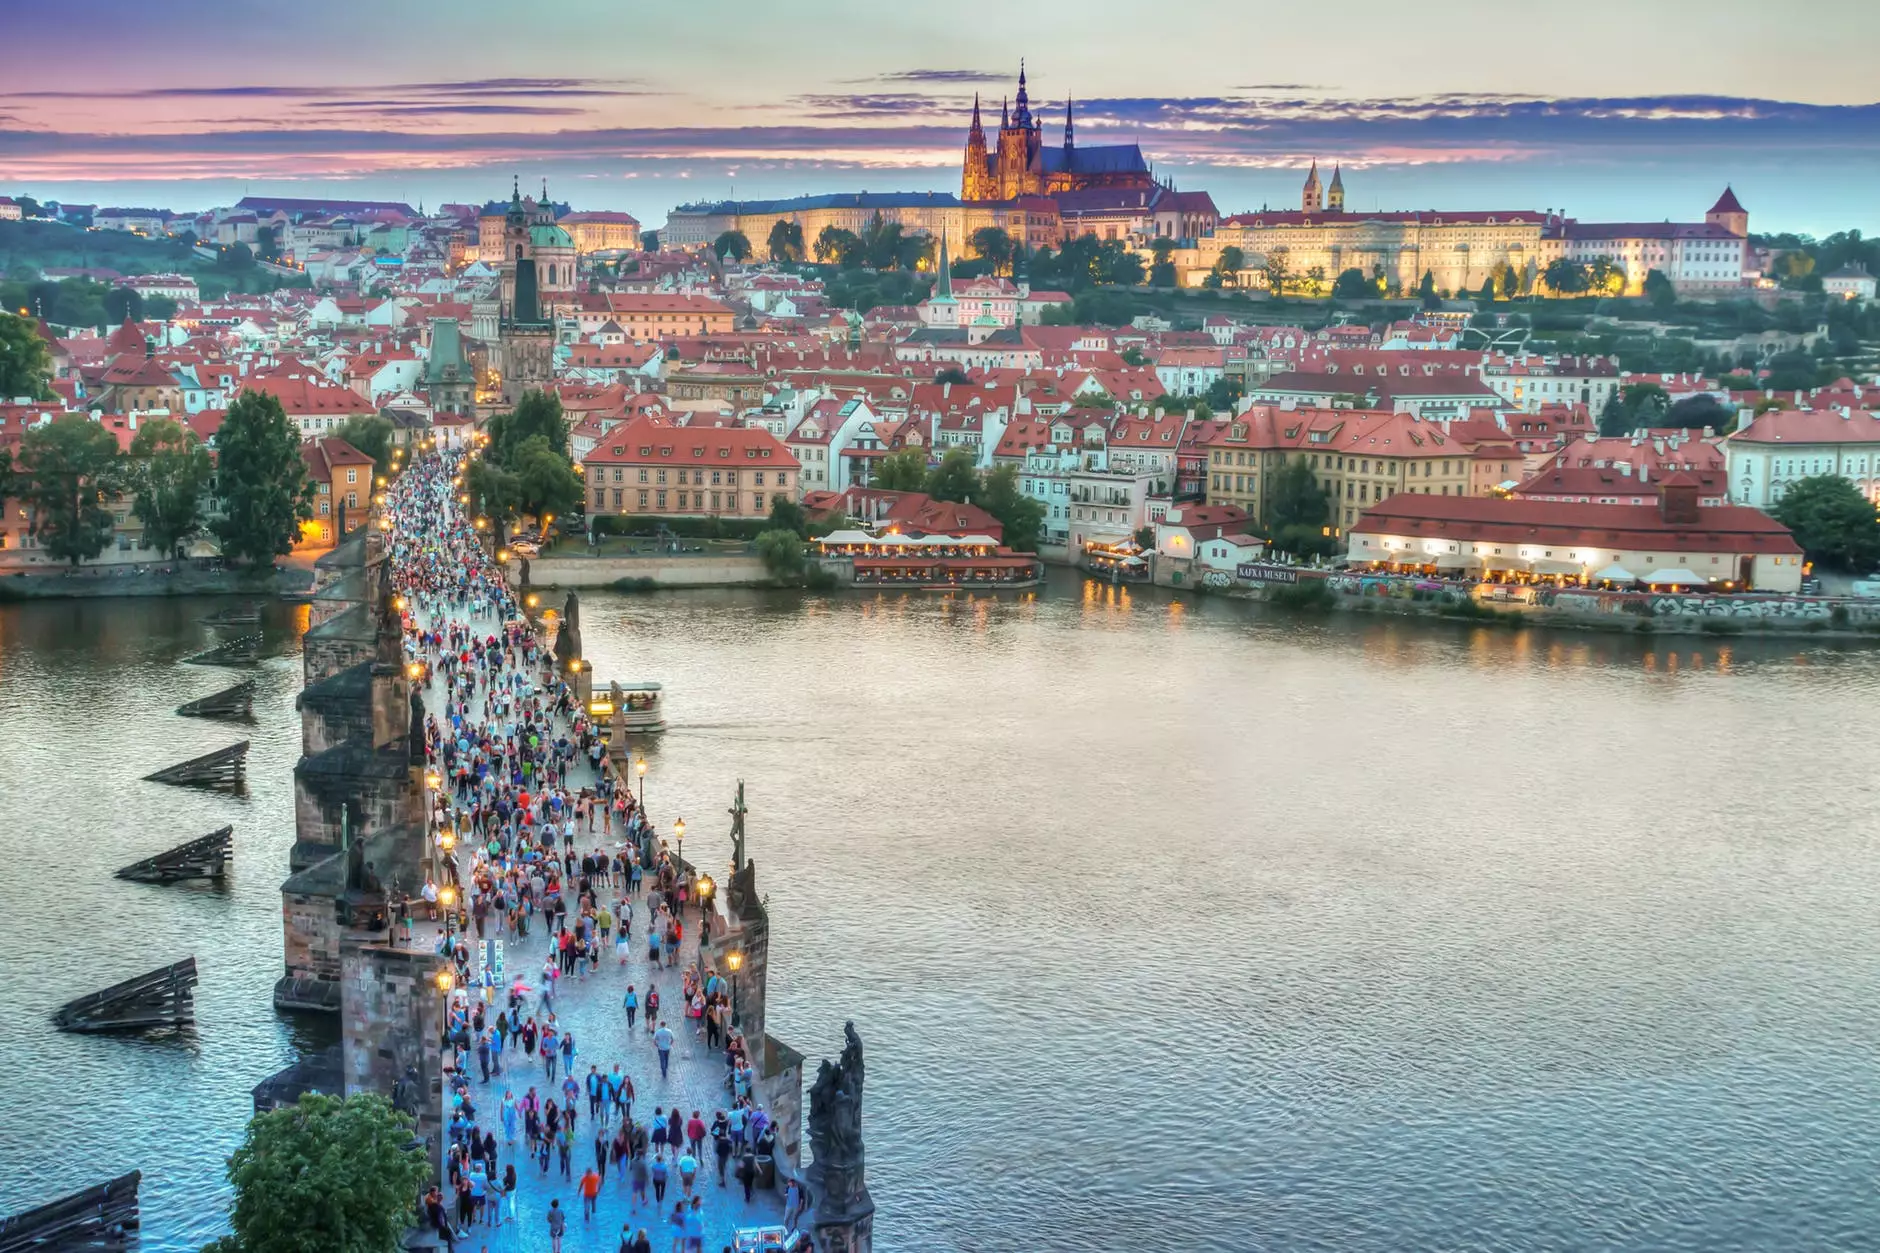 Ryanair offer cheap flights to destinations like Prague.